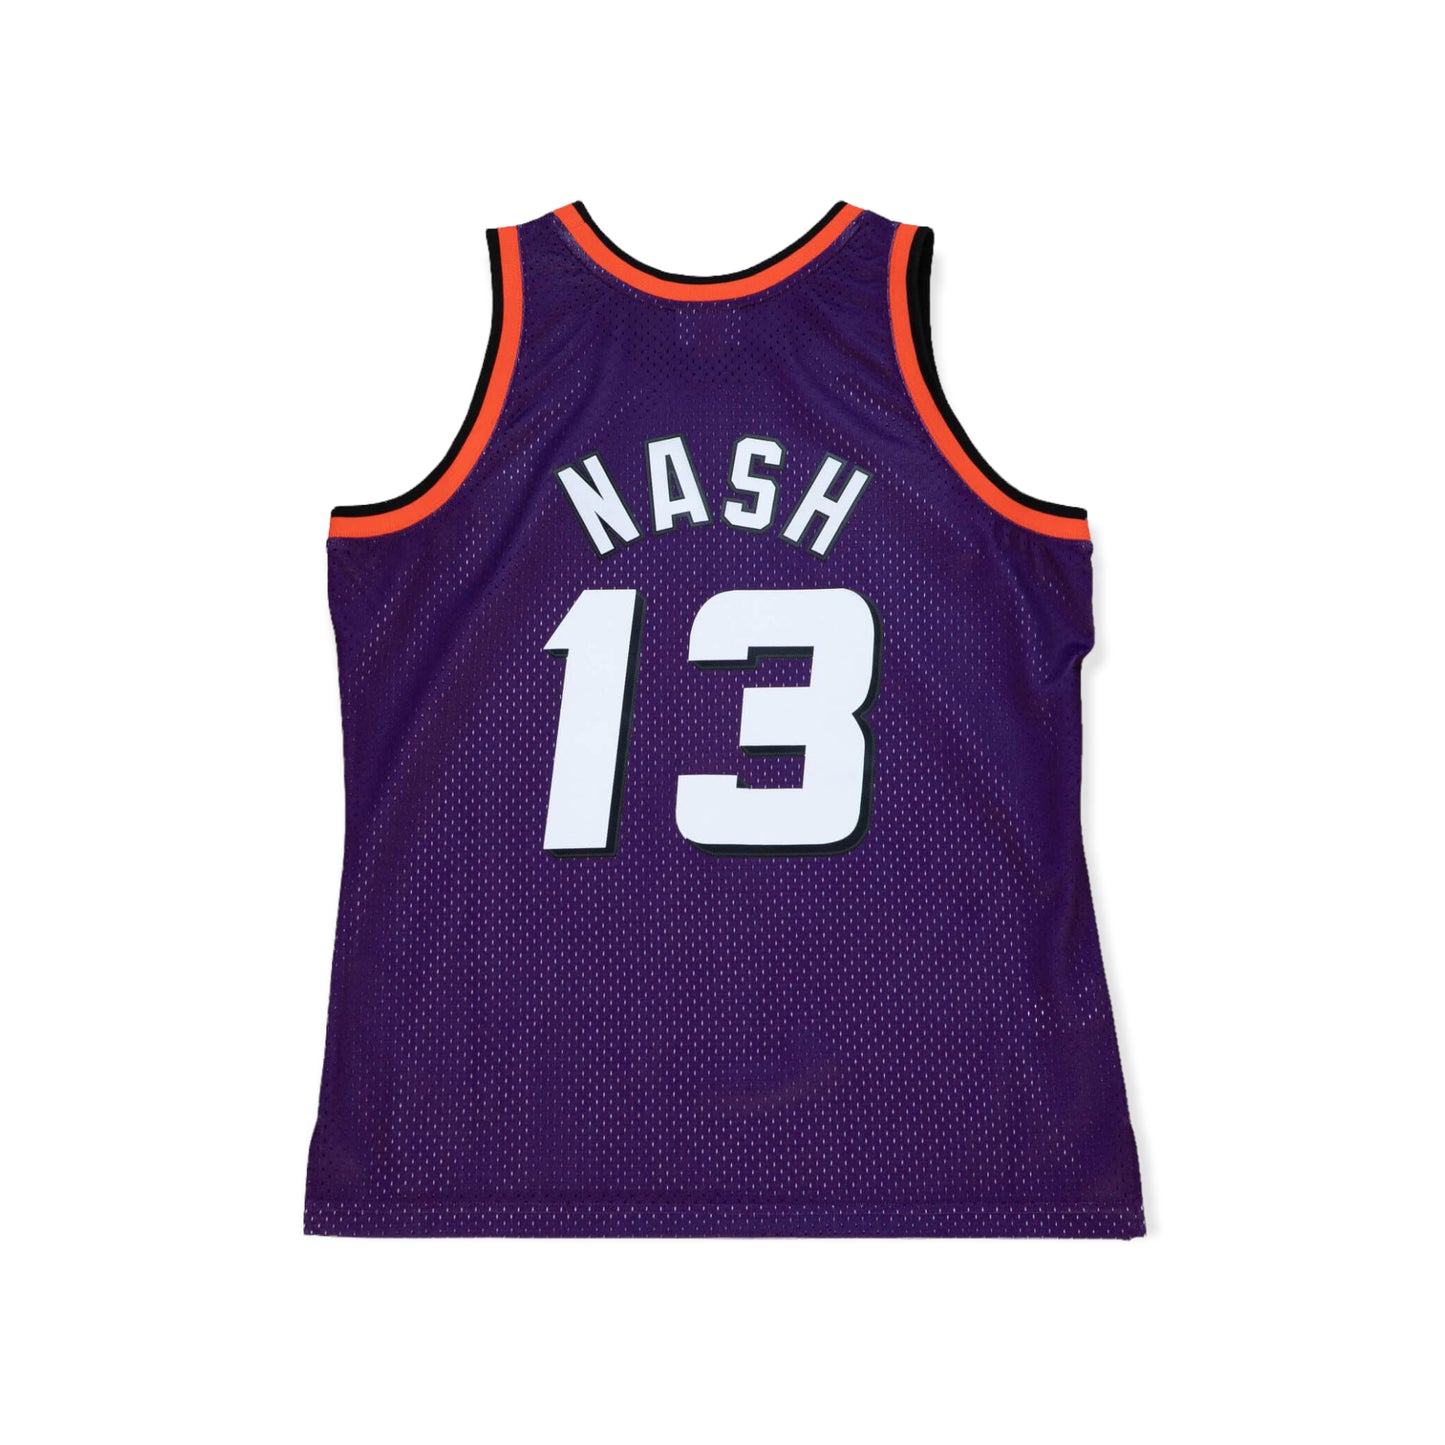 MITCHELL & NESS: Suns Steve Nash Swingman Jersey